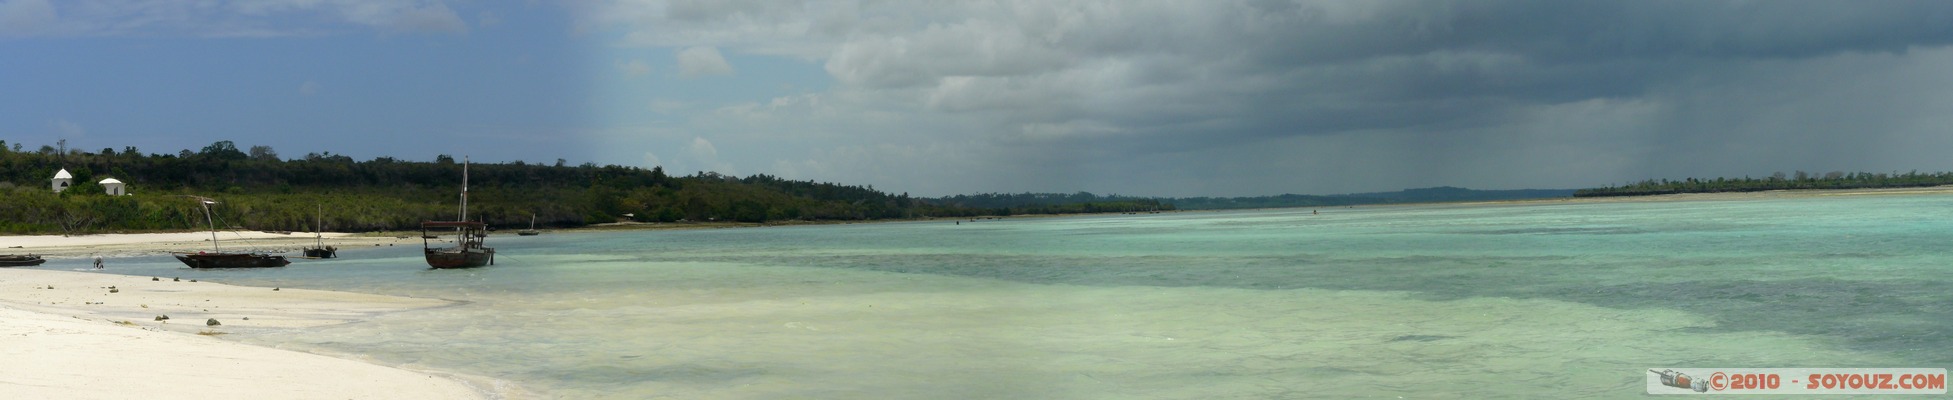 Zanzibar - Kendwa - panorama
Mots-clés: mer plage panorama bateau